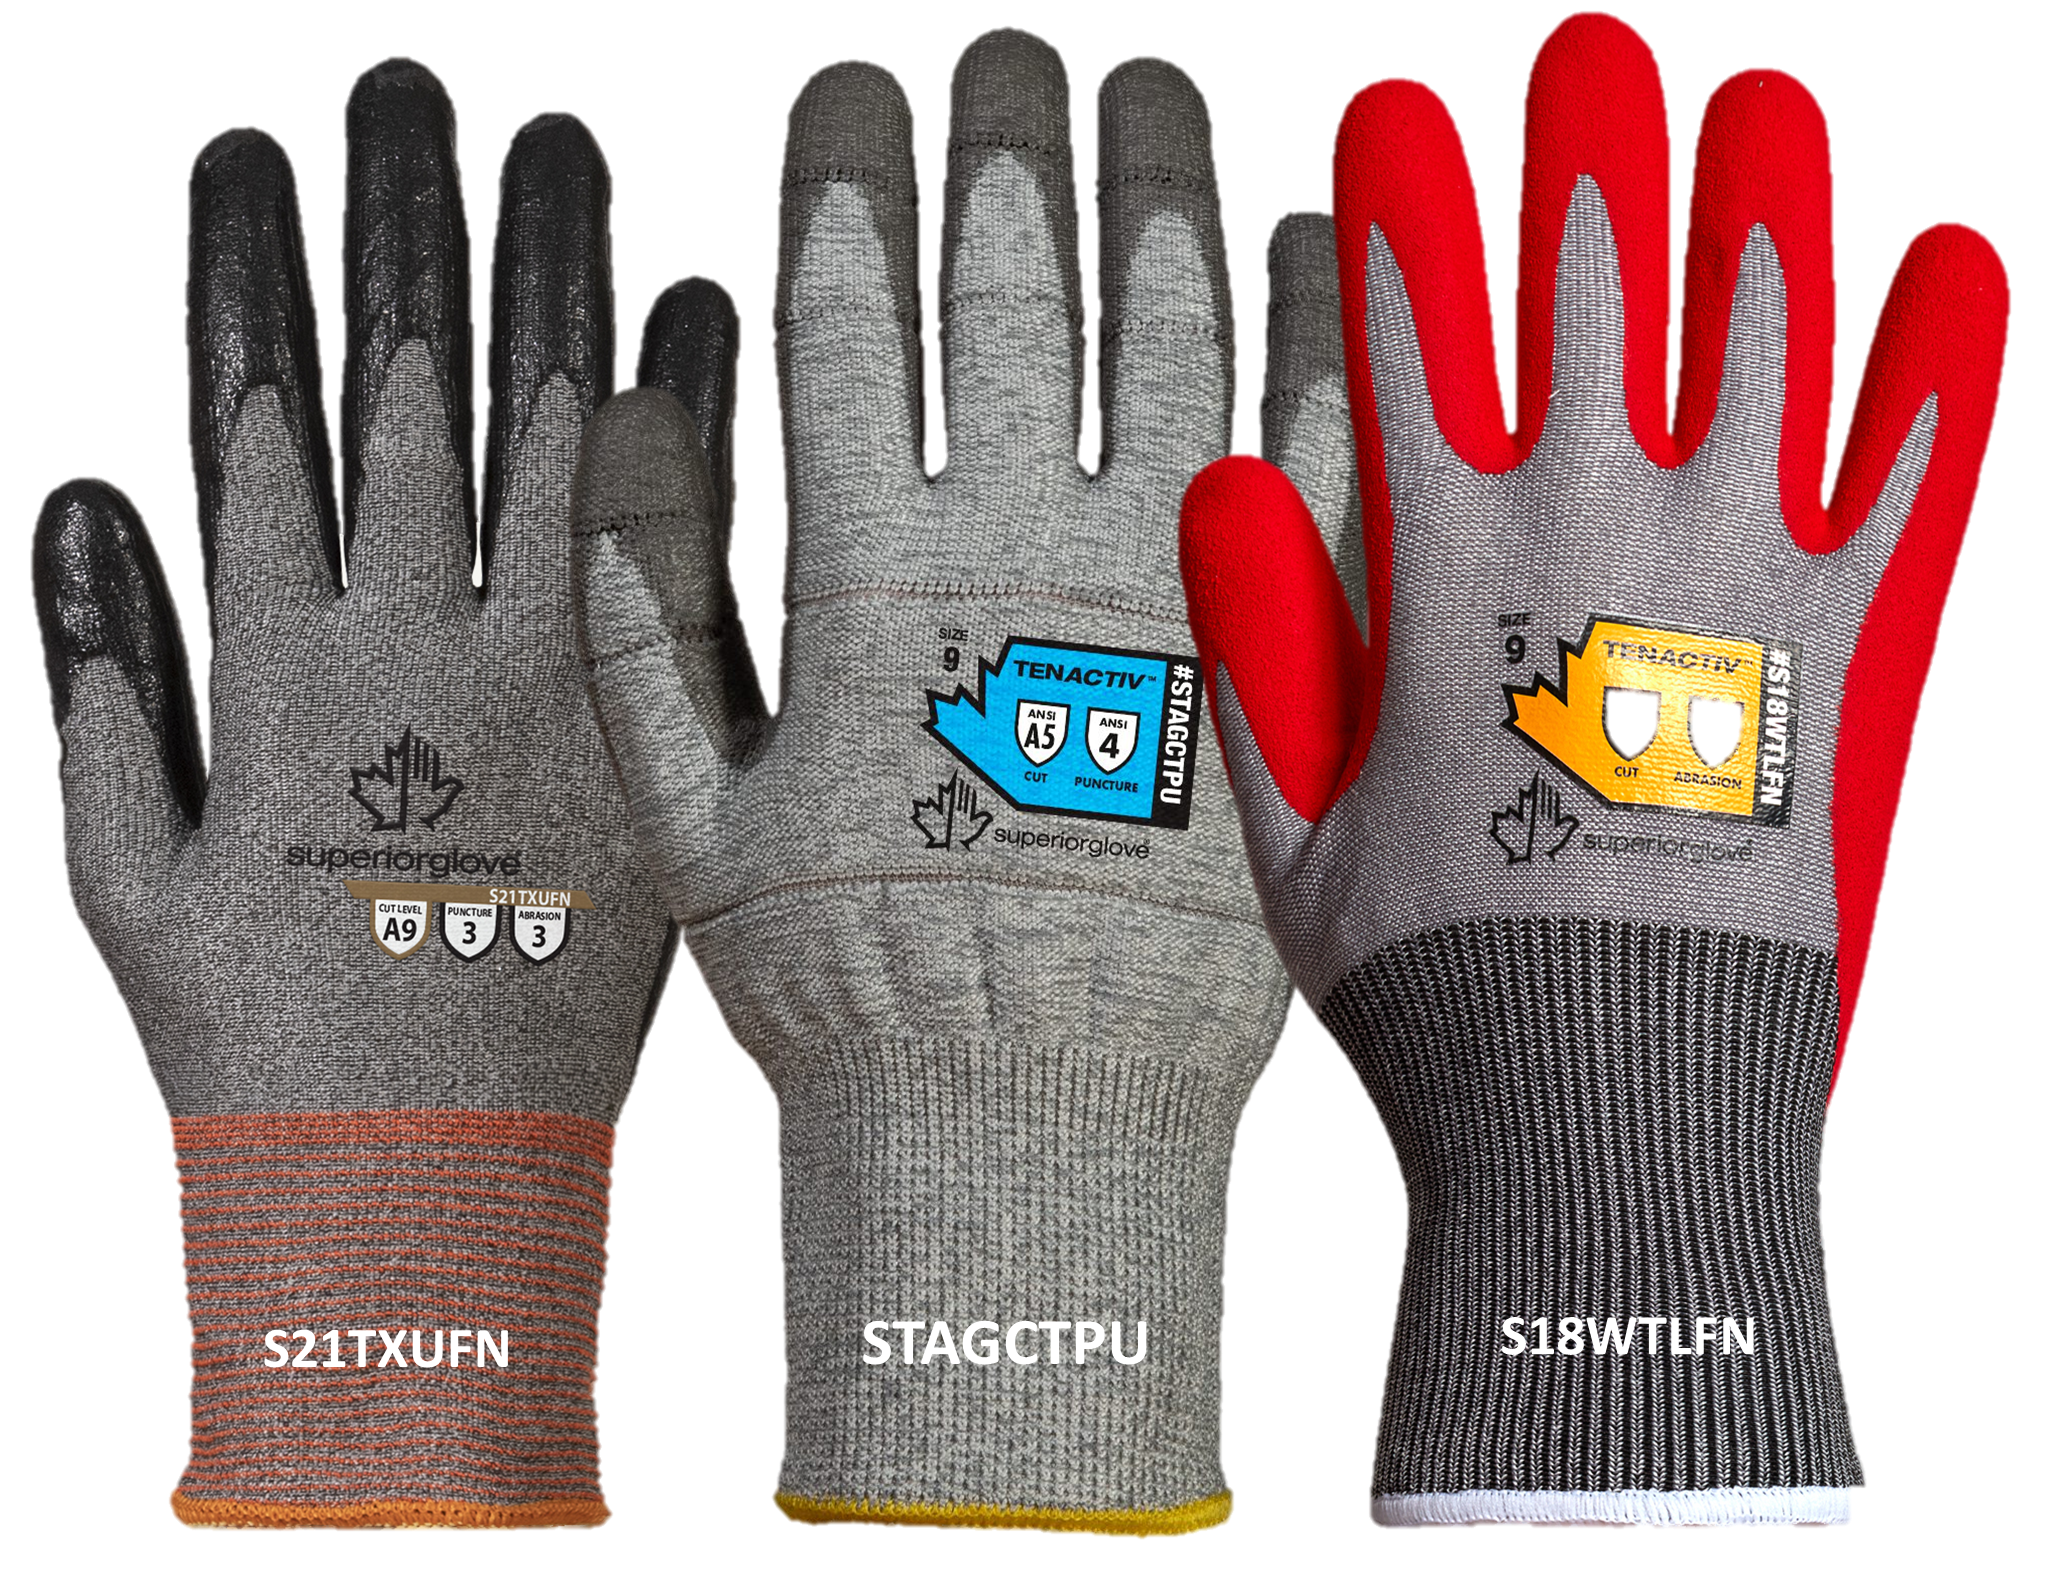 Revolutionary TenActiv™ Work Safety Gloves from Superior Glove